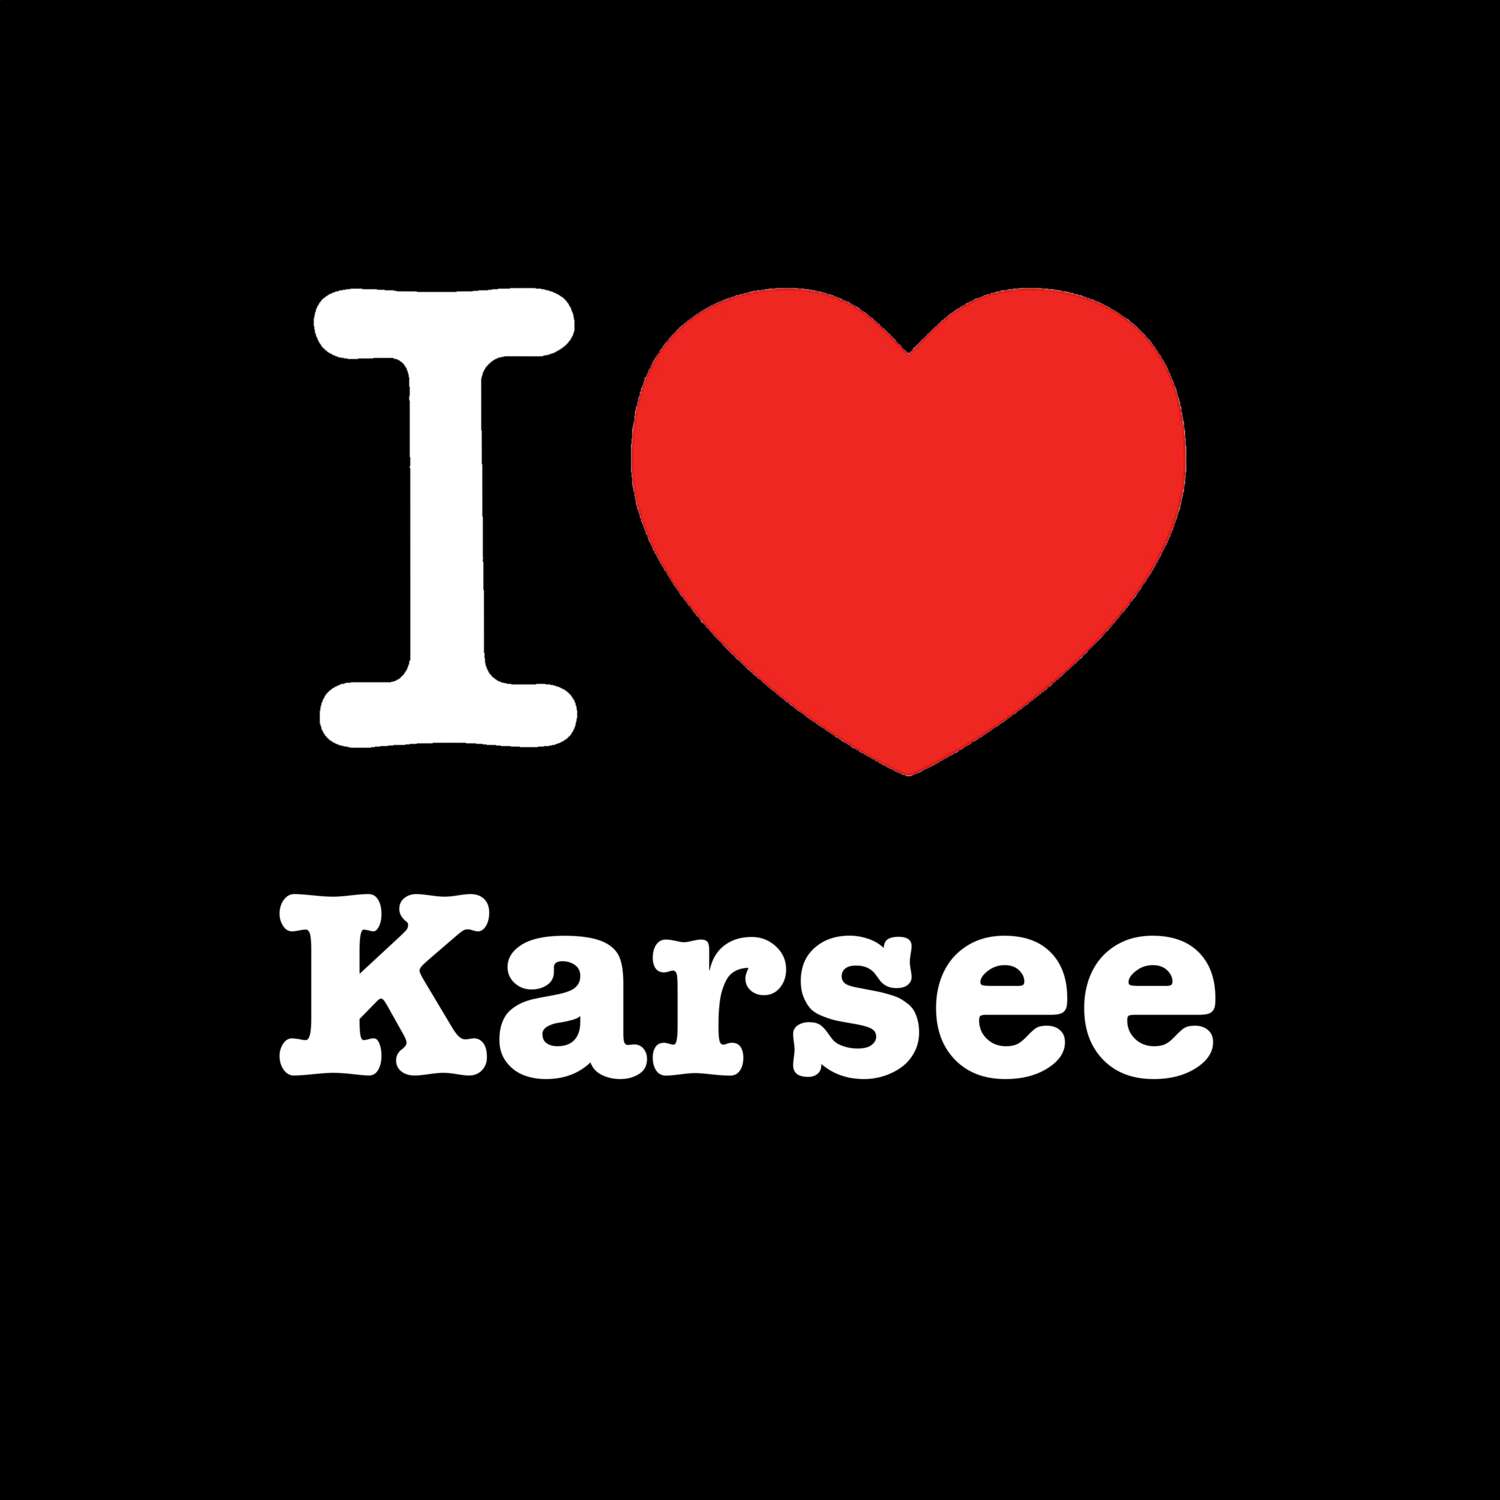 Karsee T-Shirt »I love«